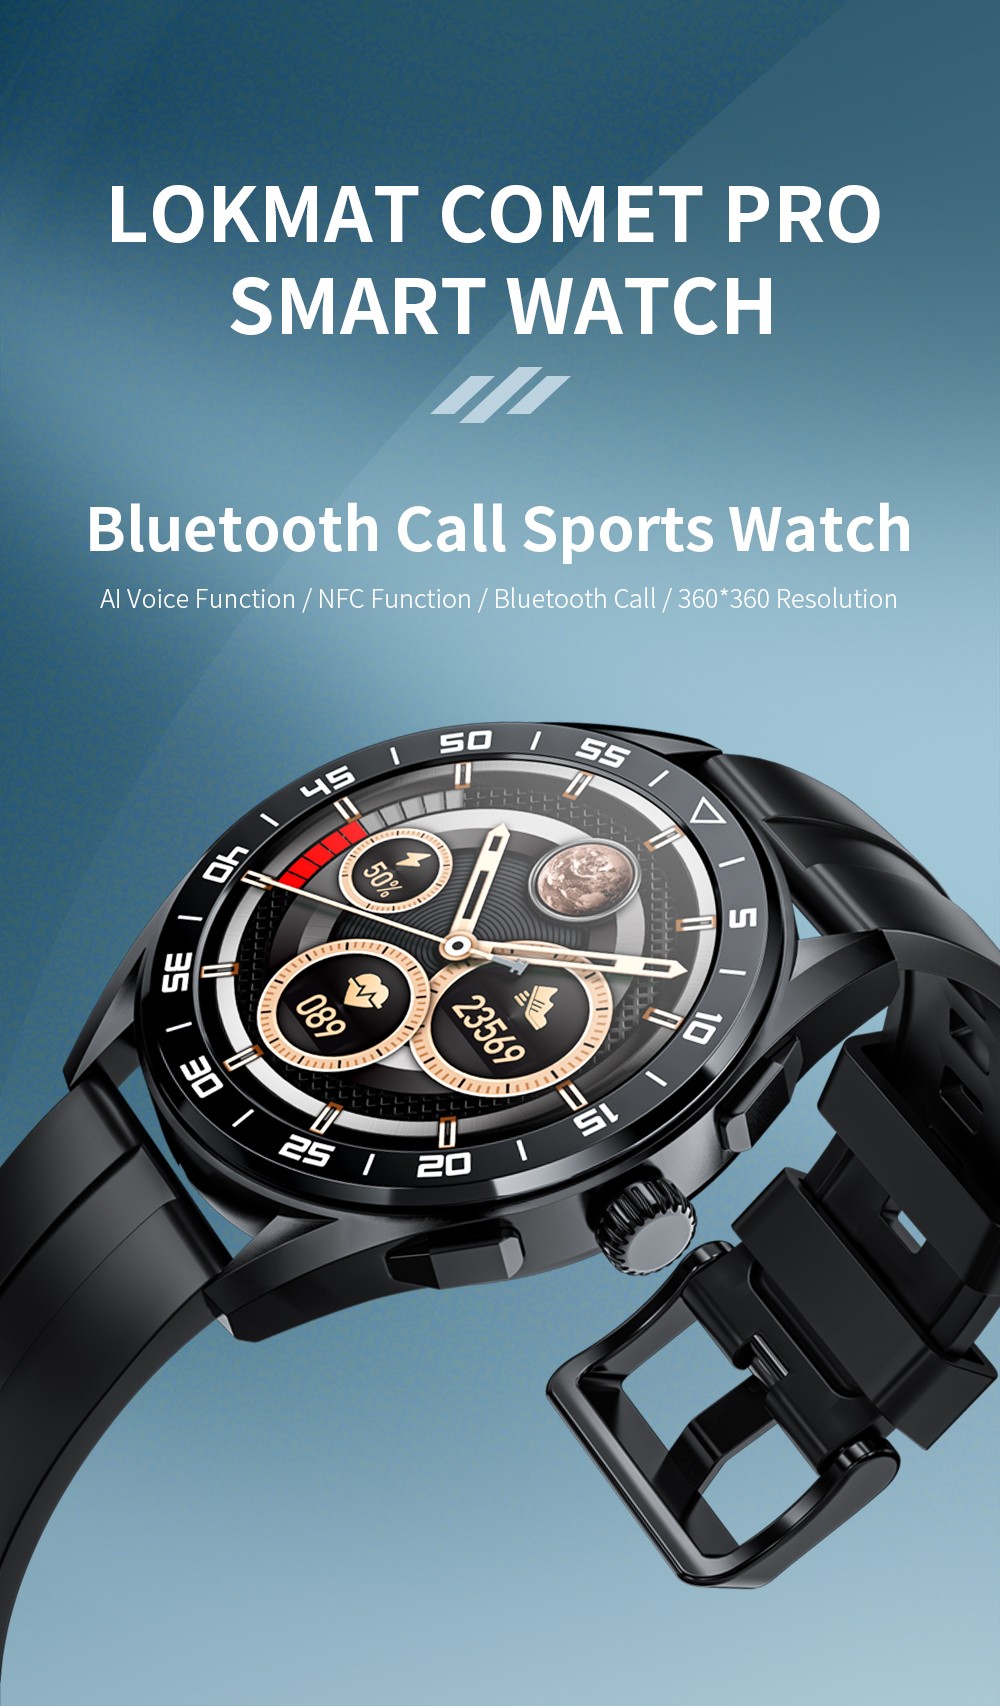 Hanki LOKMAT COMET PRO Smartwatch Bluetooth Calling Watch 1.32 tuuman näyttö vain 30 € GEEKBUYING-kupongillamme